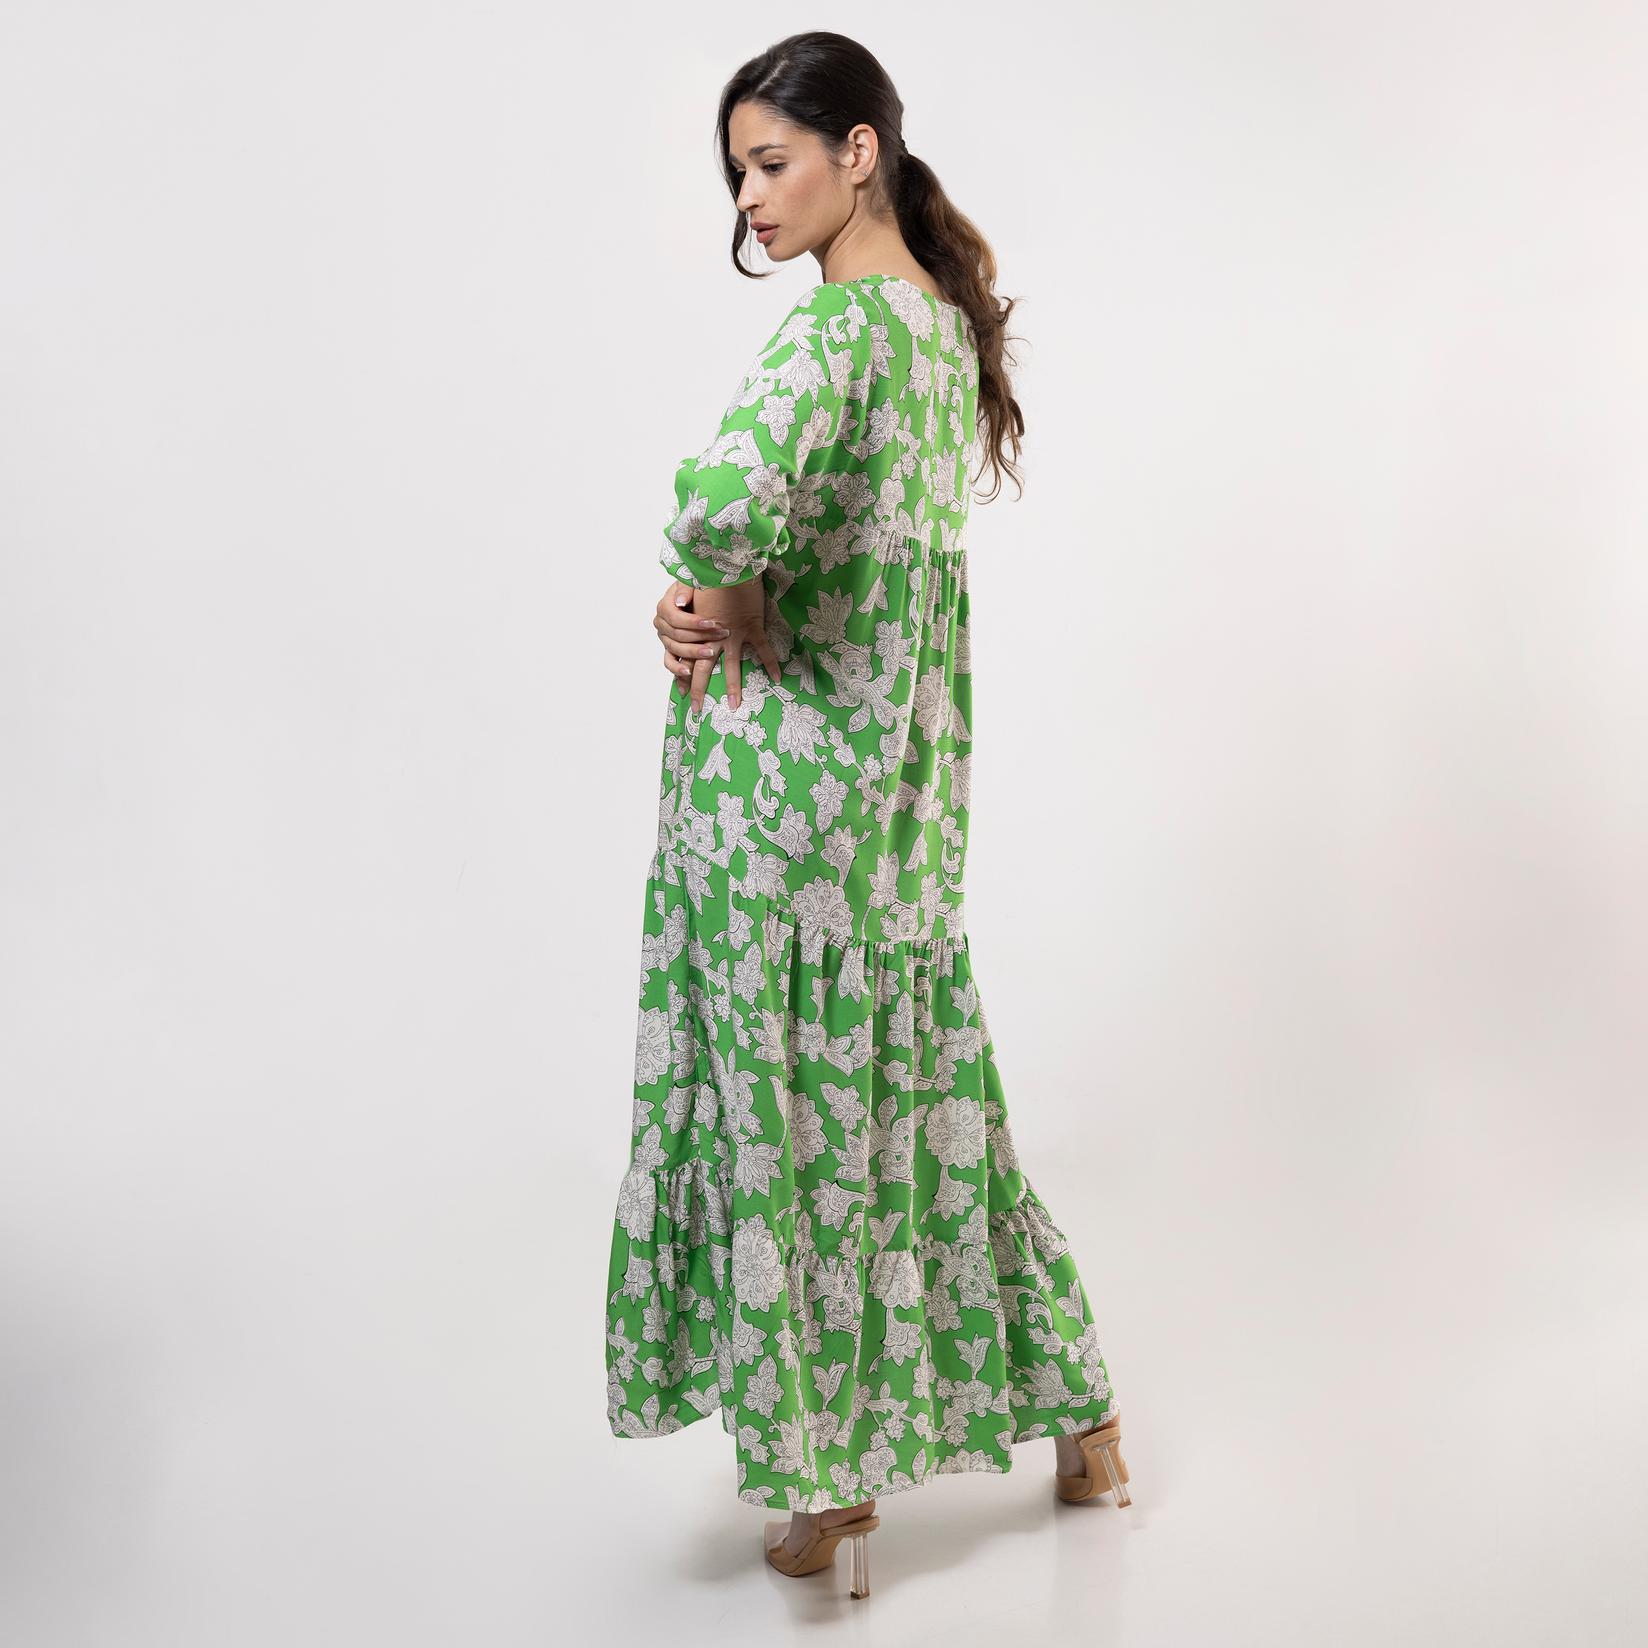 Selected image for FAME Ženska haljina sa cvetovima zelena